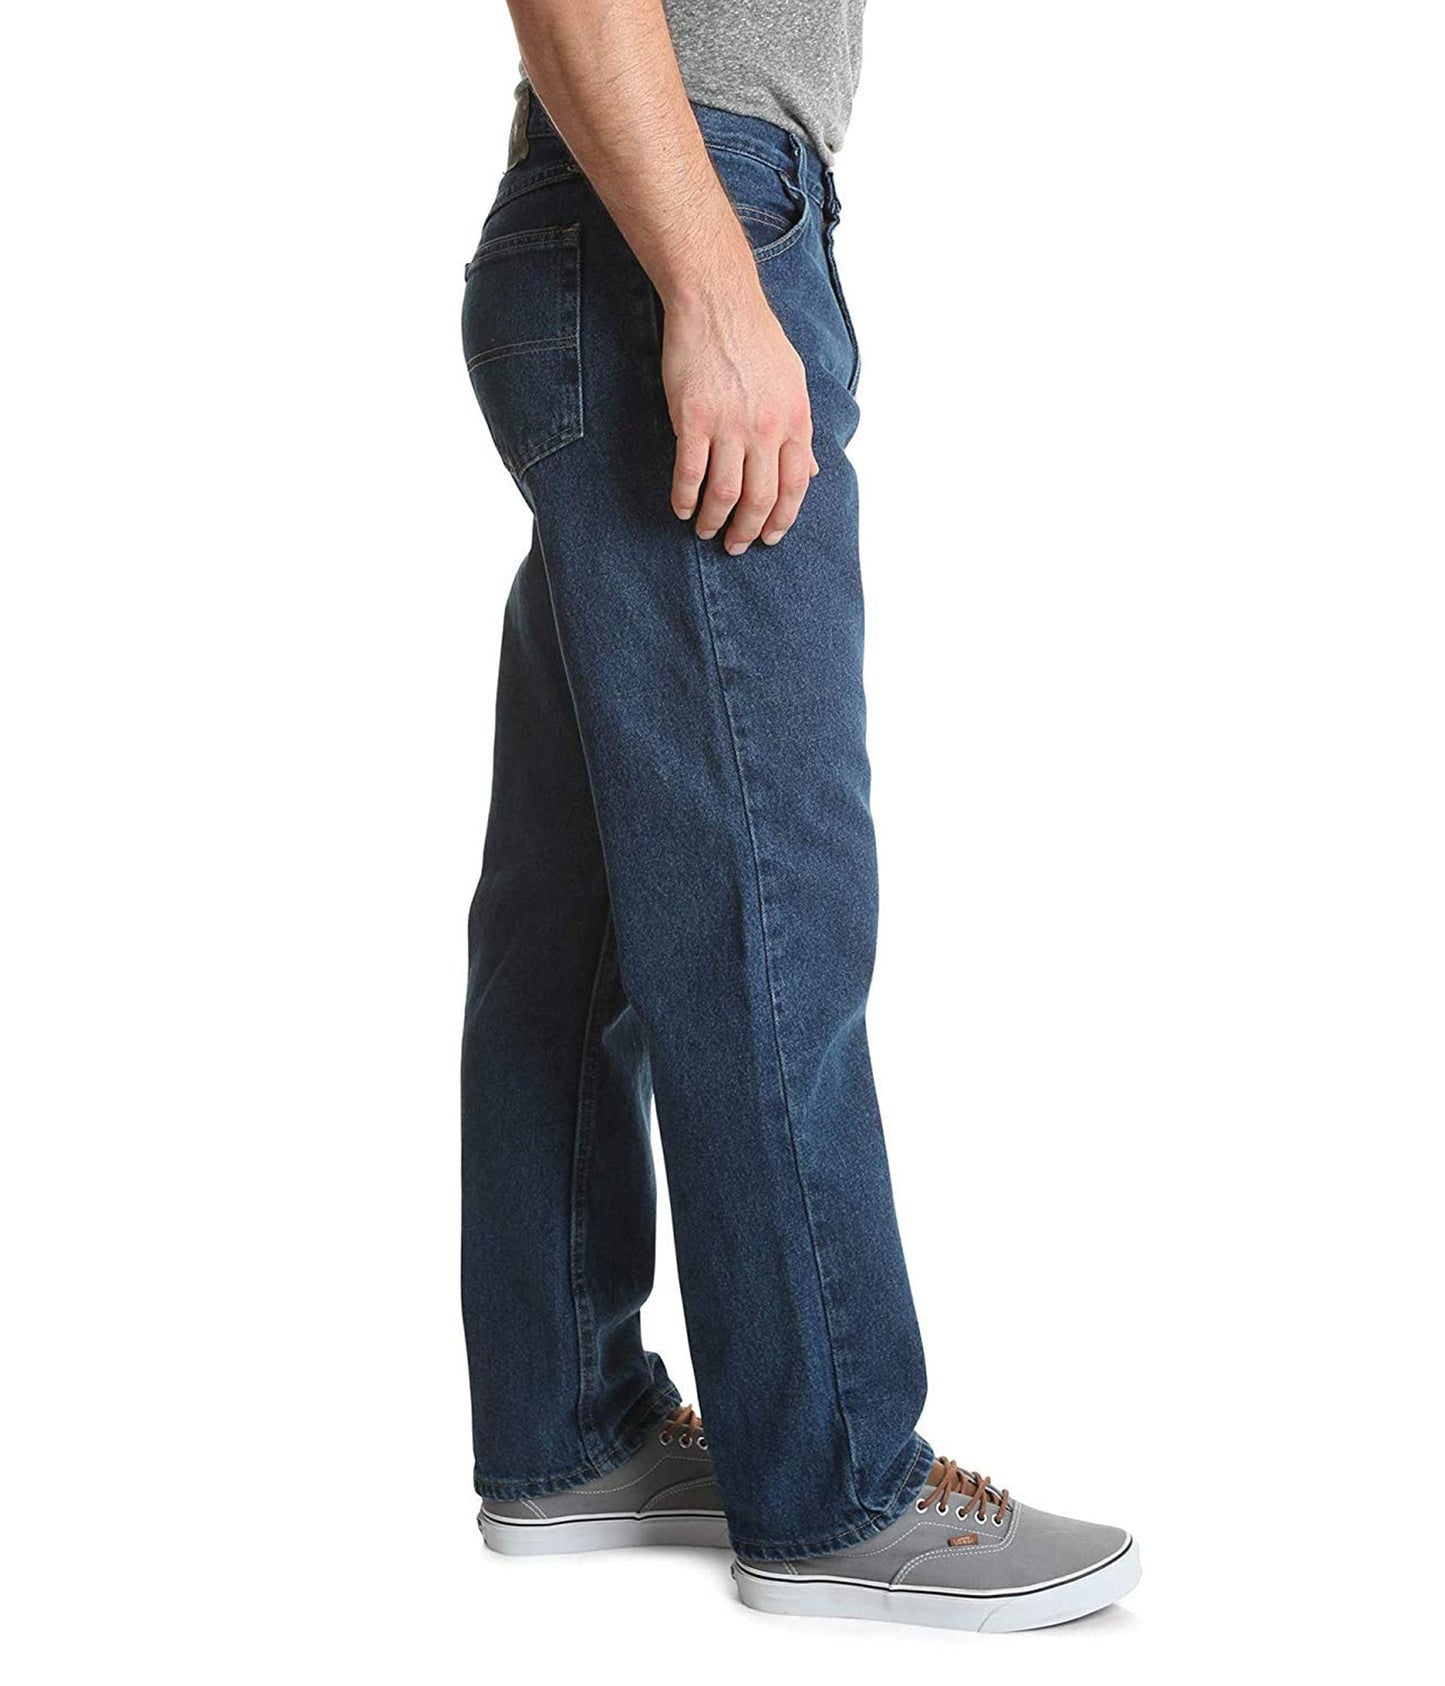 Wrangler Authentics Men's Classic 5-Pocket Relaxed Fit Cotton Jean, Dark Stonewash, 38W x 30L